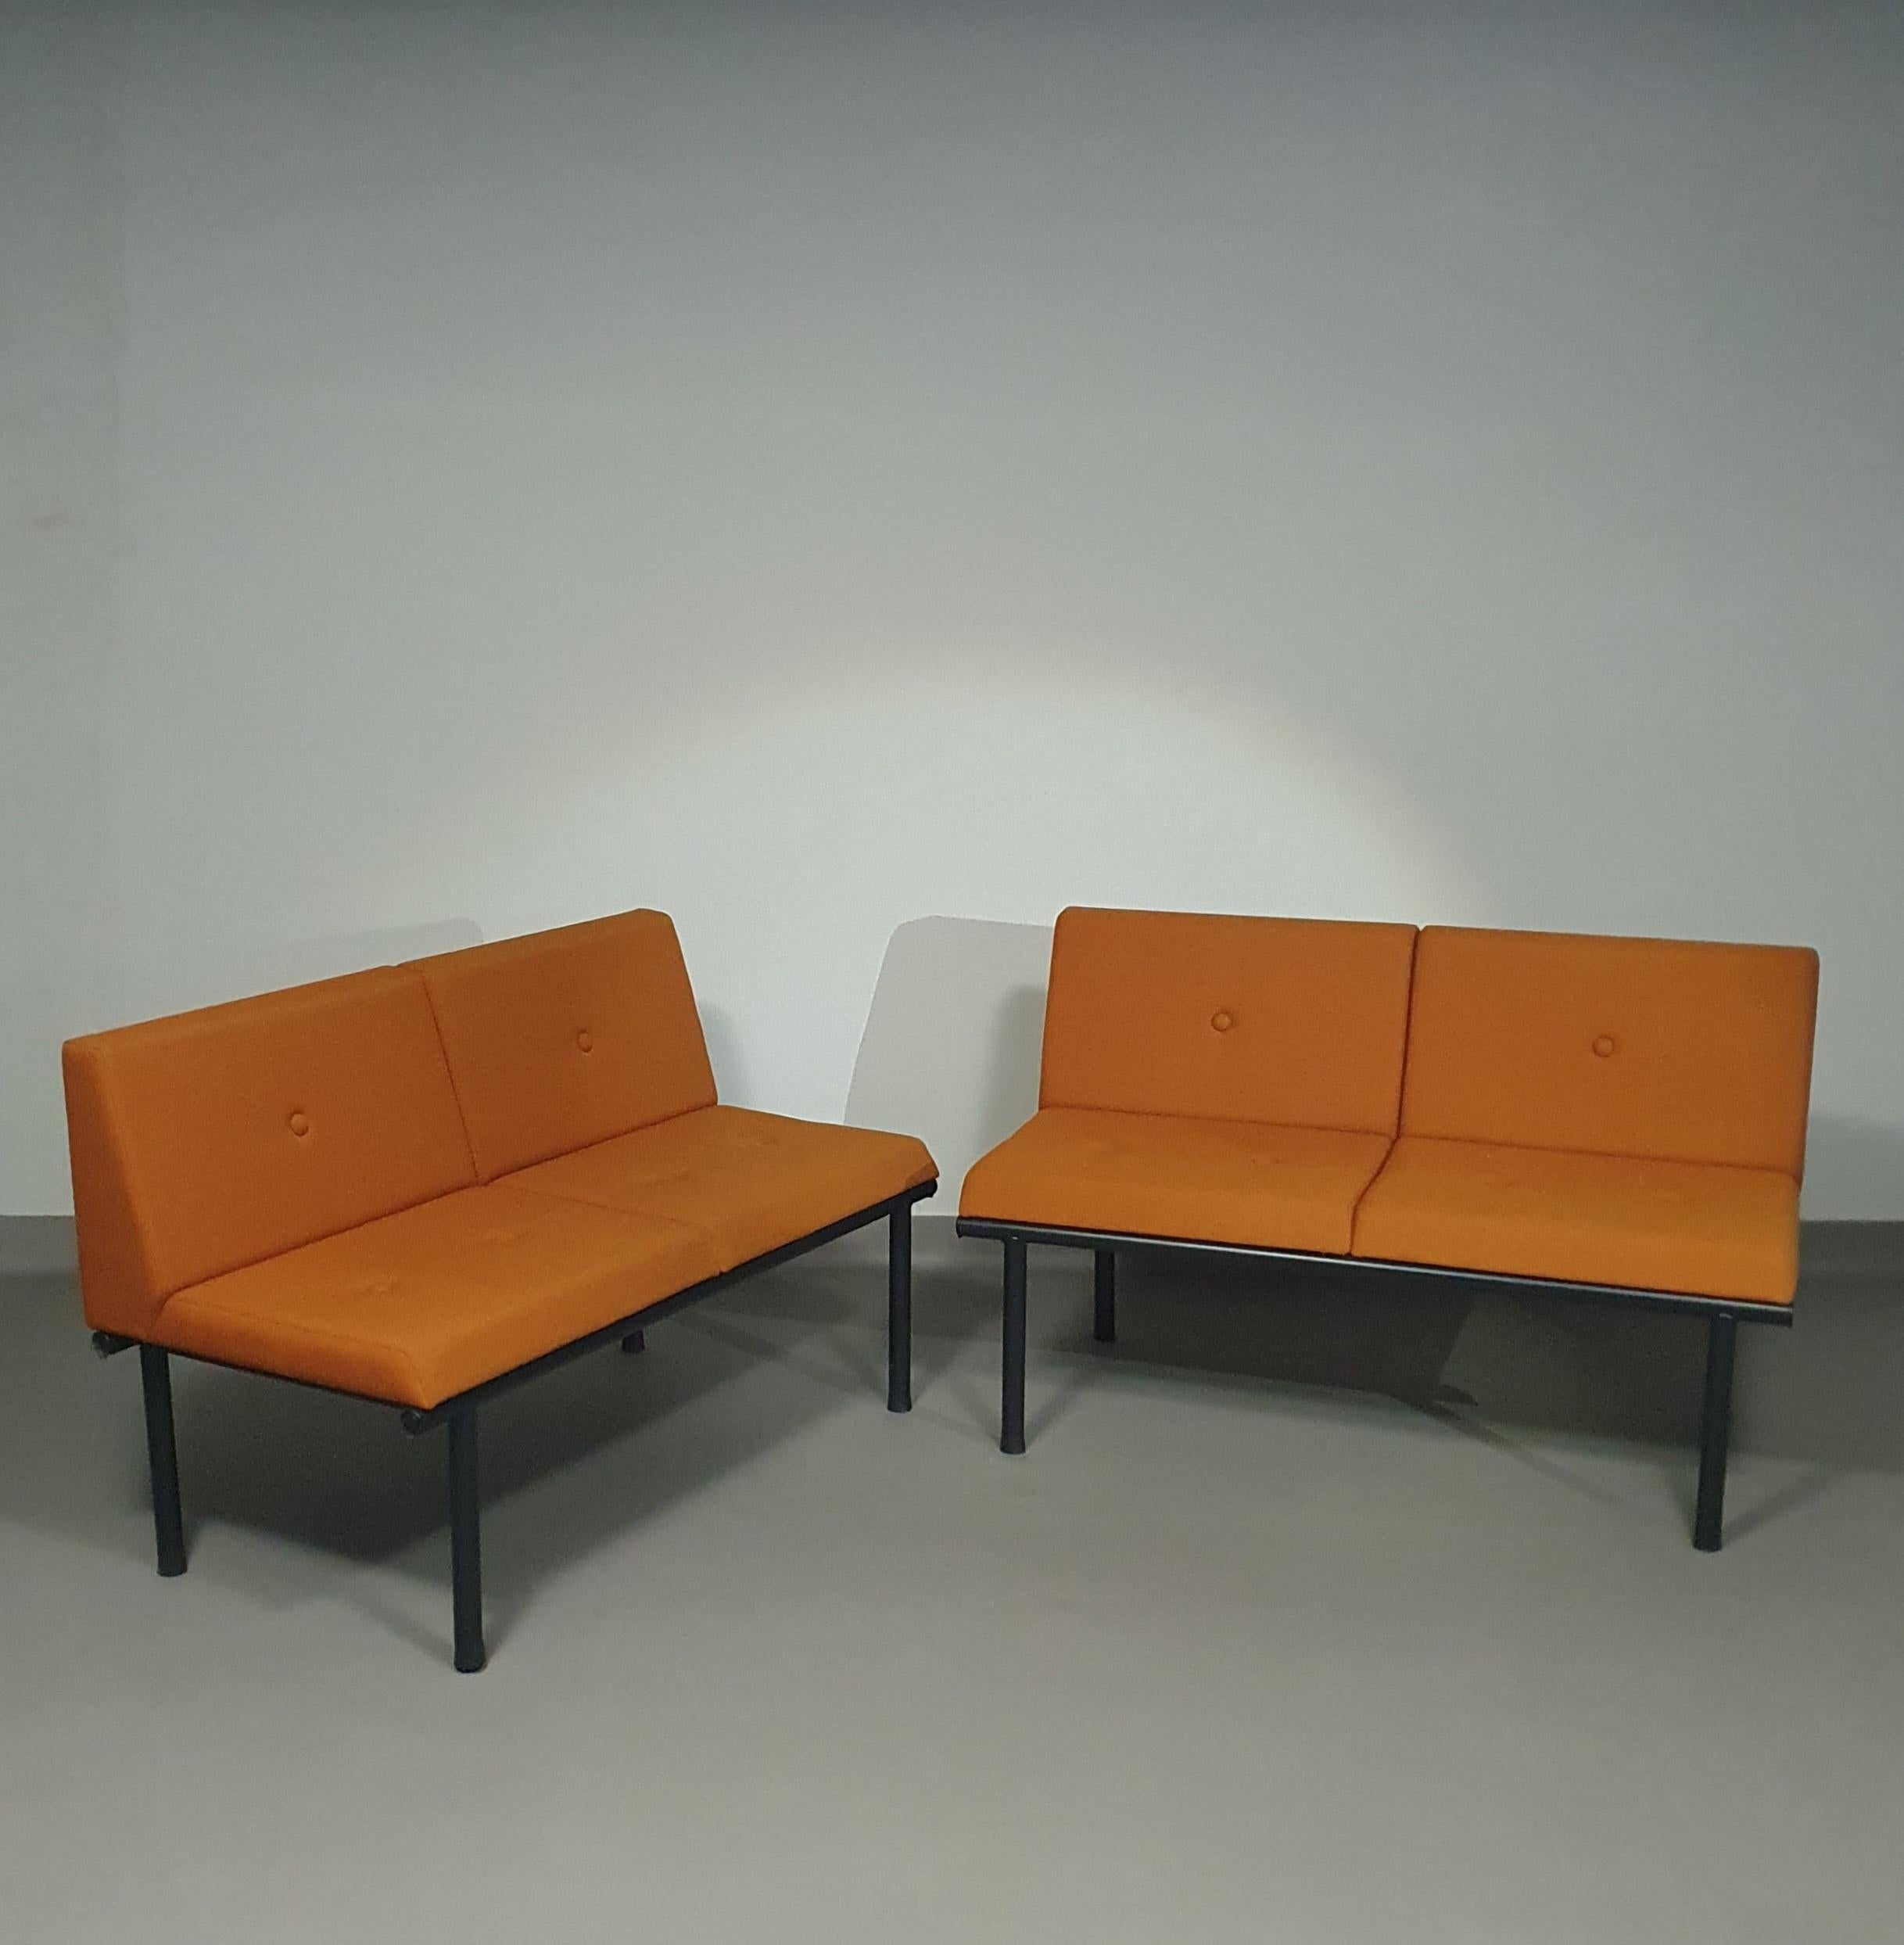  Bas Pruyser bench / sofa 2 x for Ahrend / De Cirkel 90s  For Sale 3